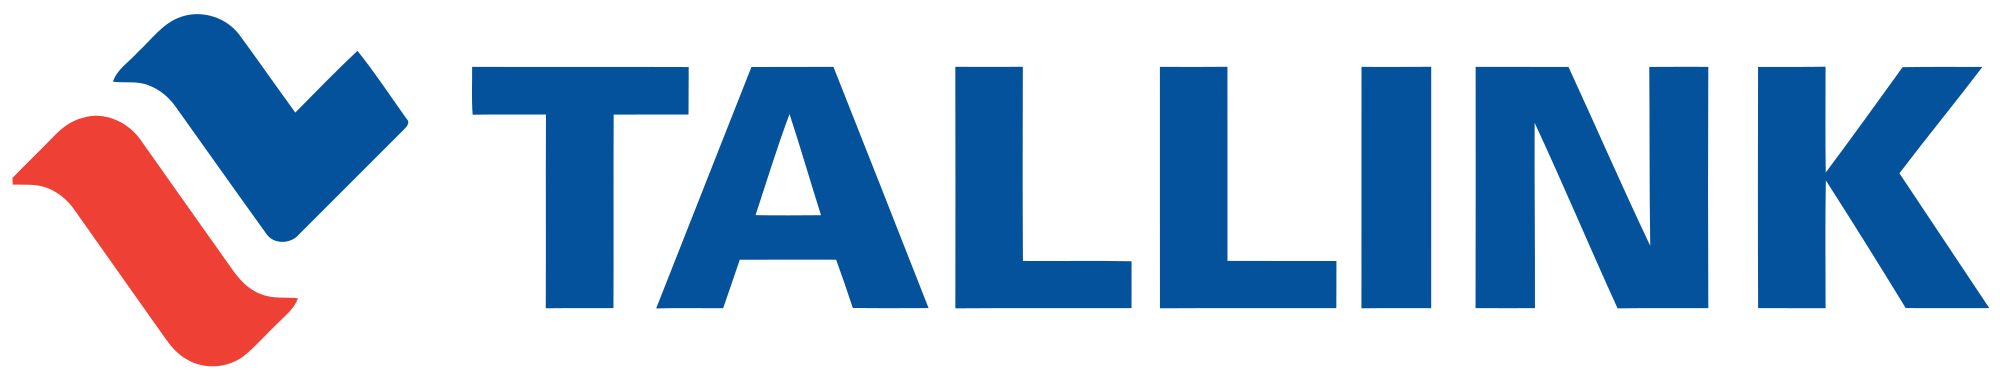 Tallink_logo.svg